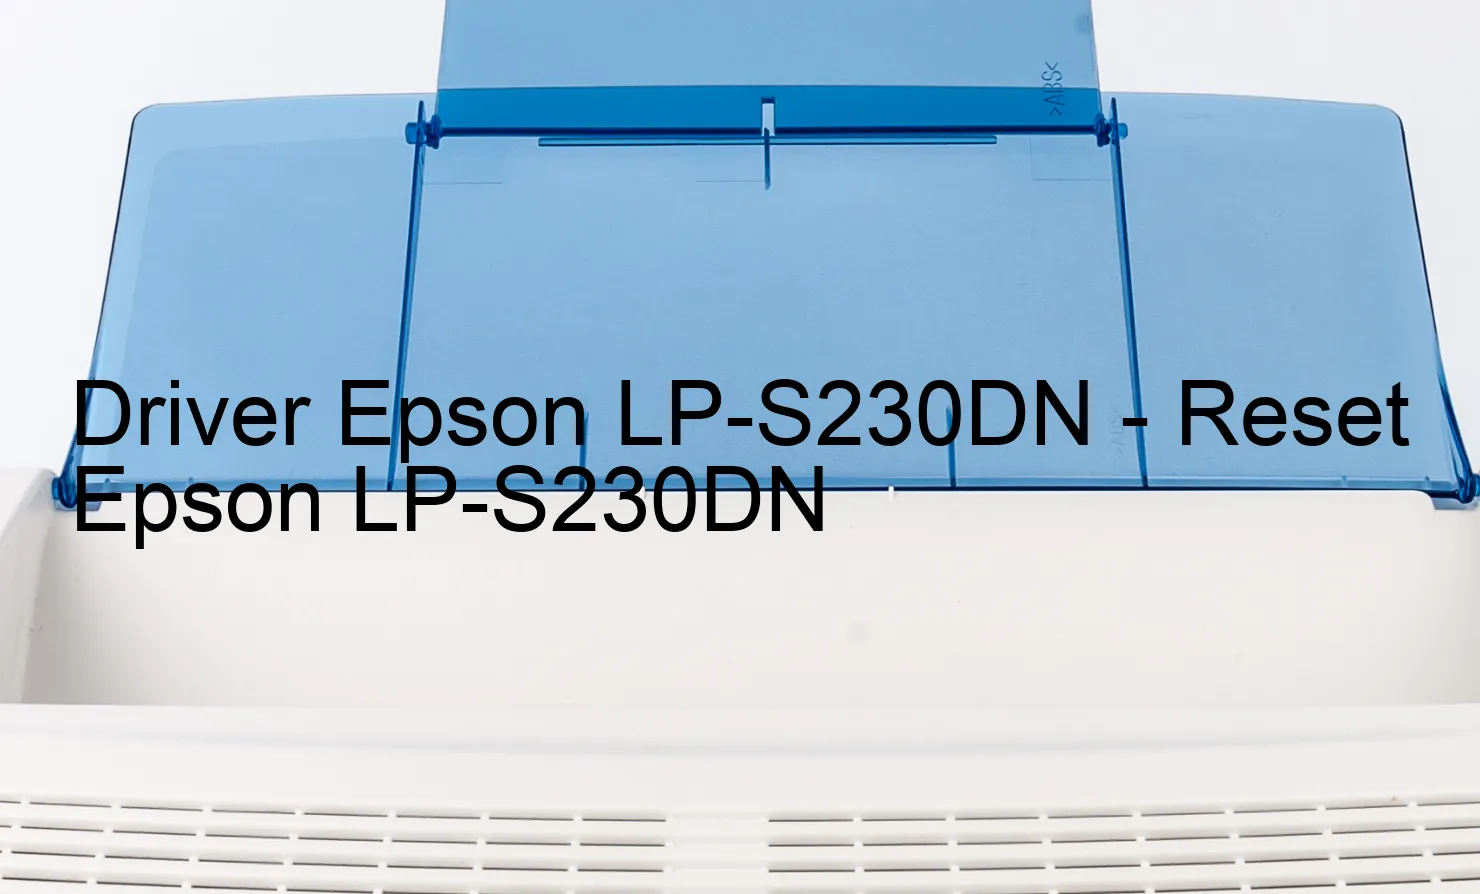 Epson LP-S230DNのドライバー、Epson LP-S230DNのリセットソフトウェア